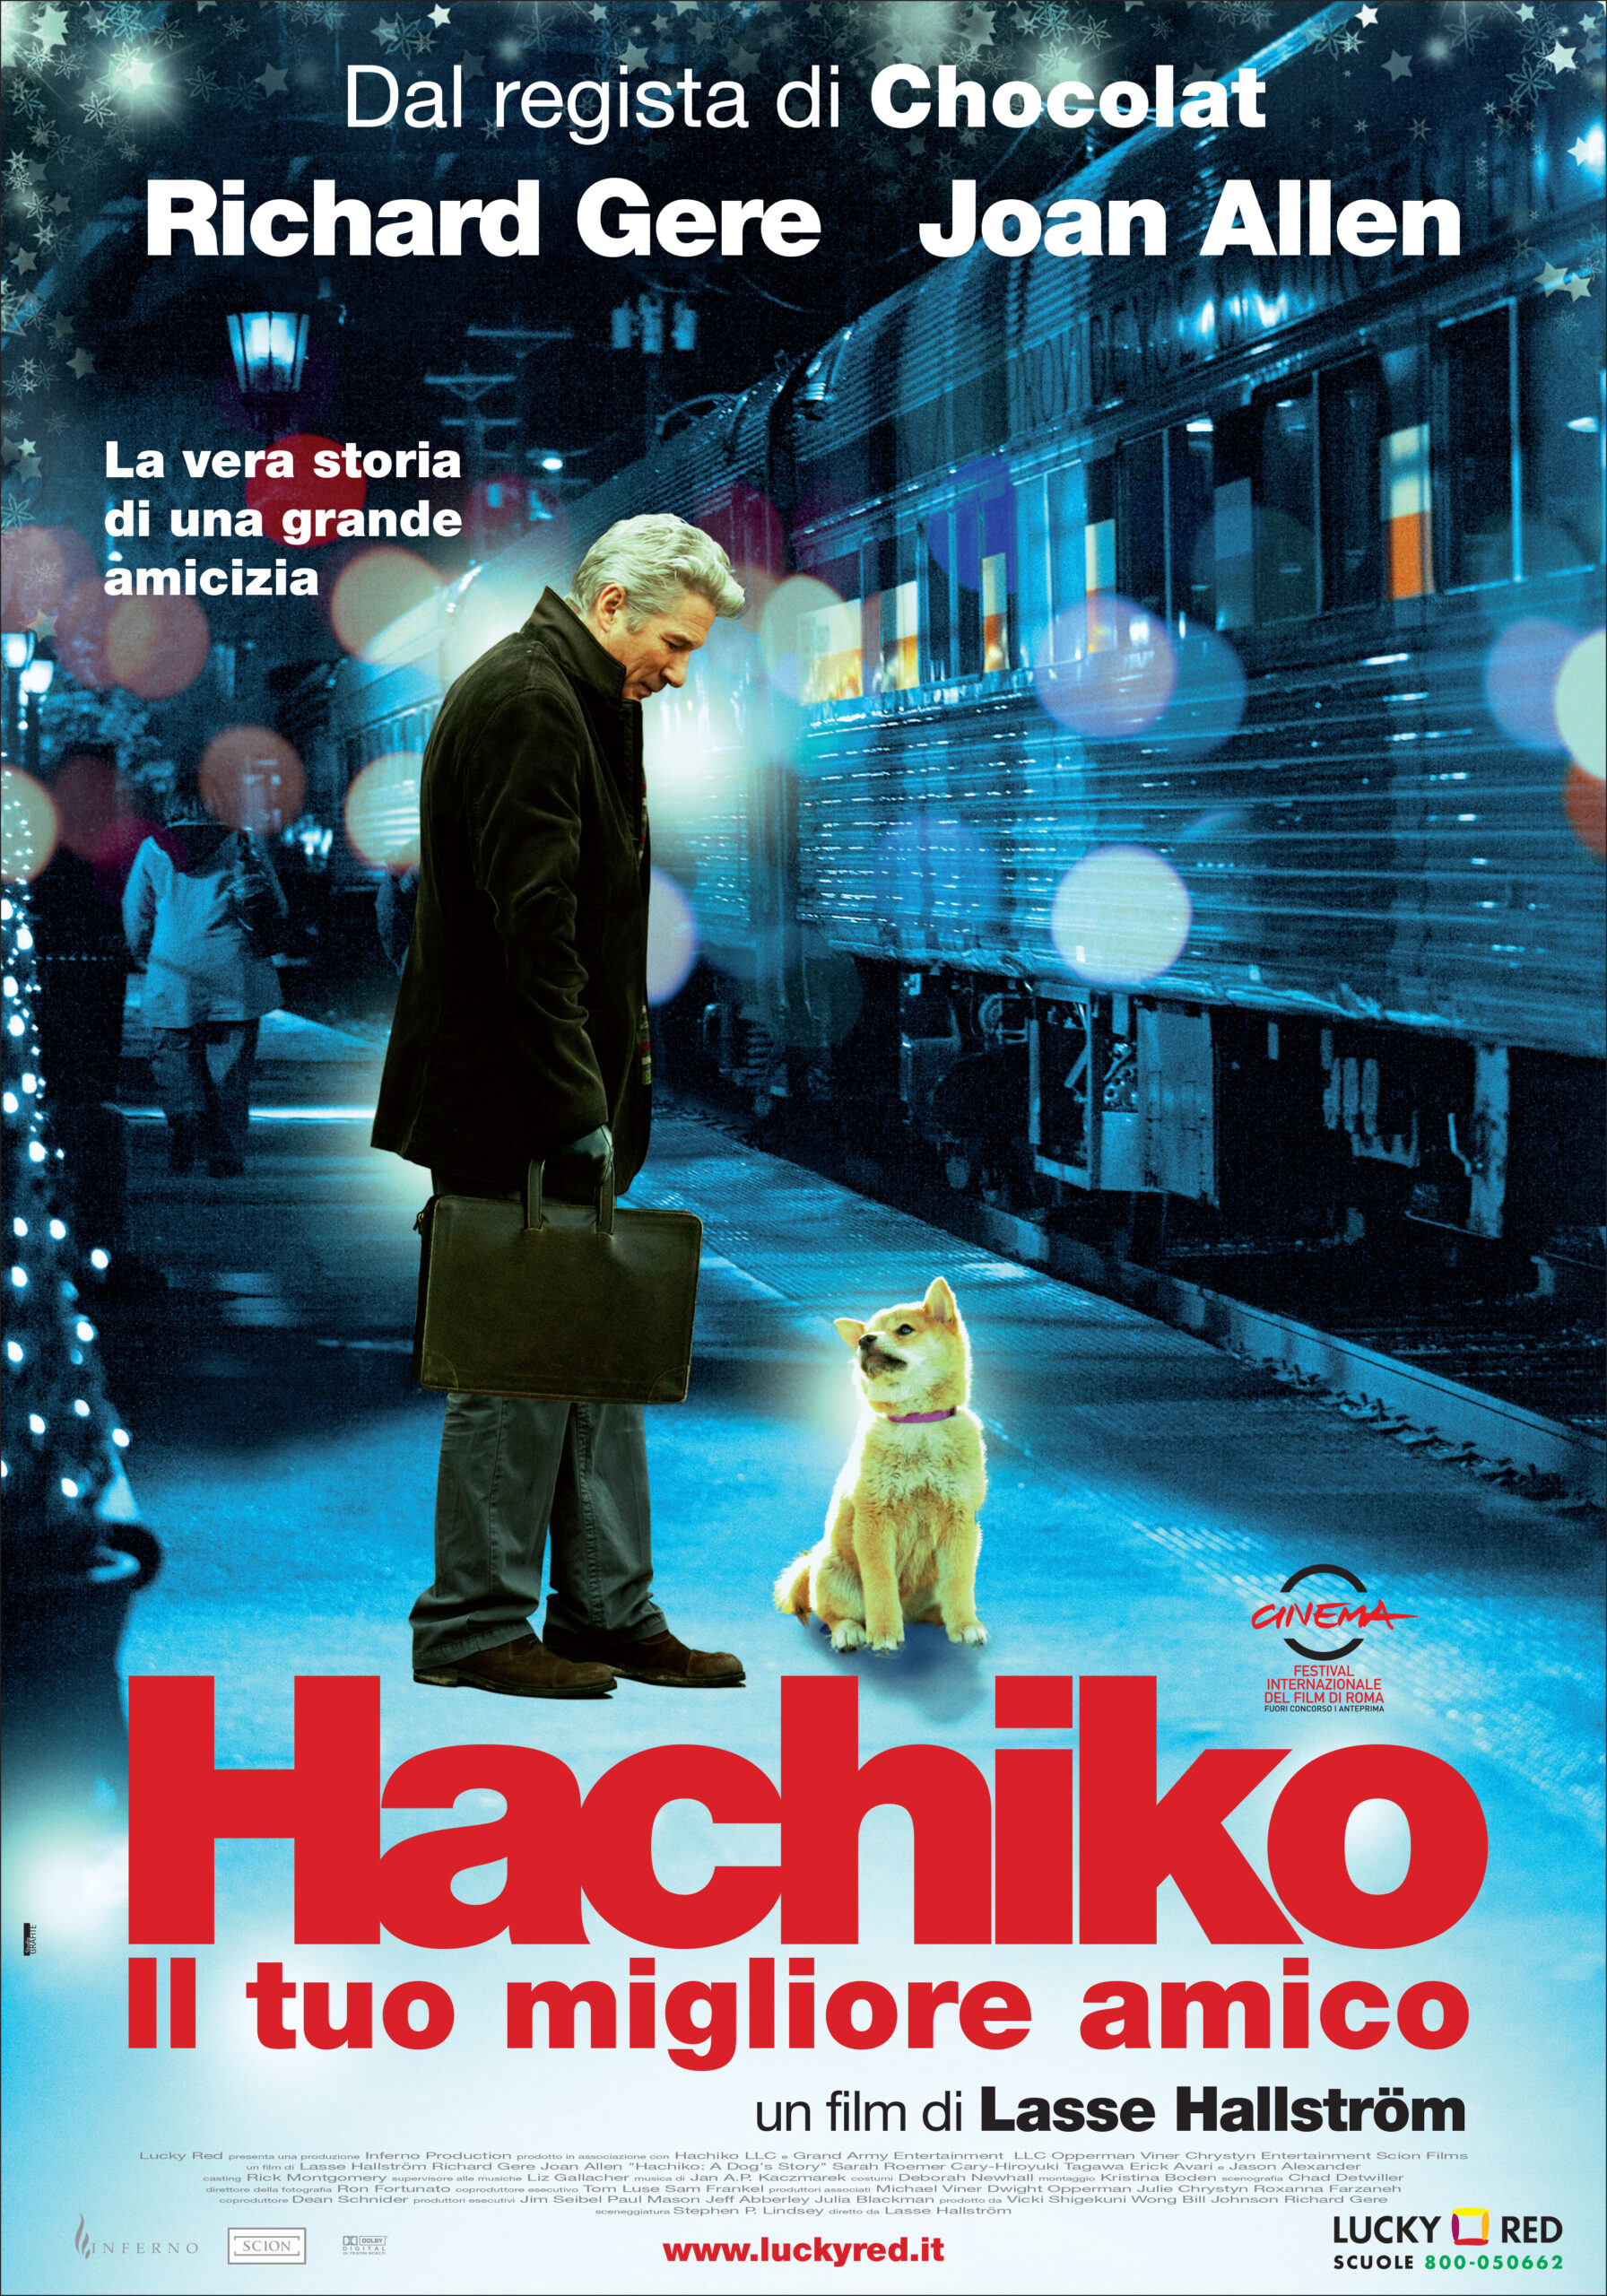 La locandina del film Hachiko